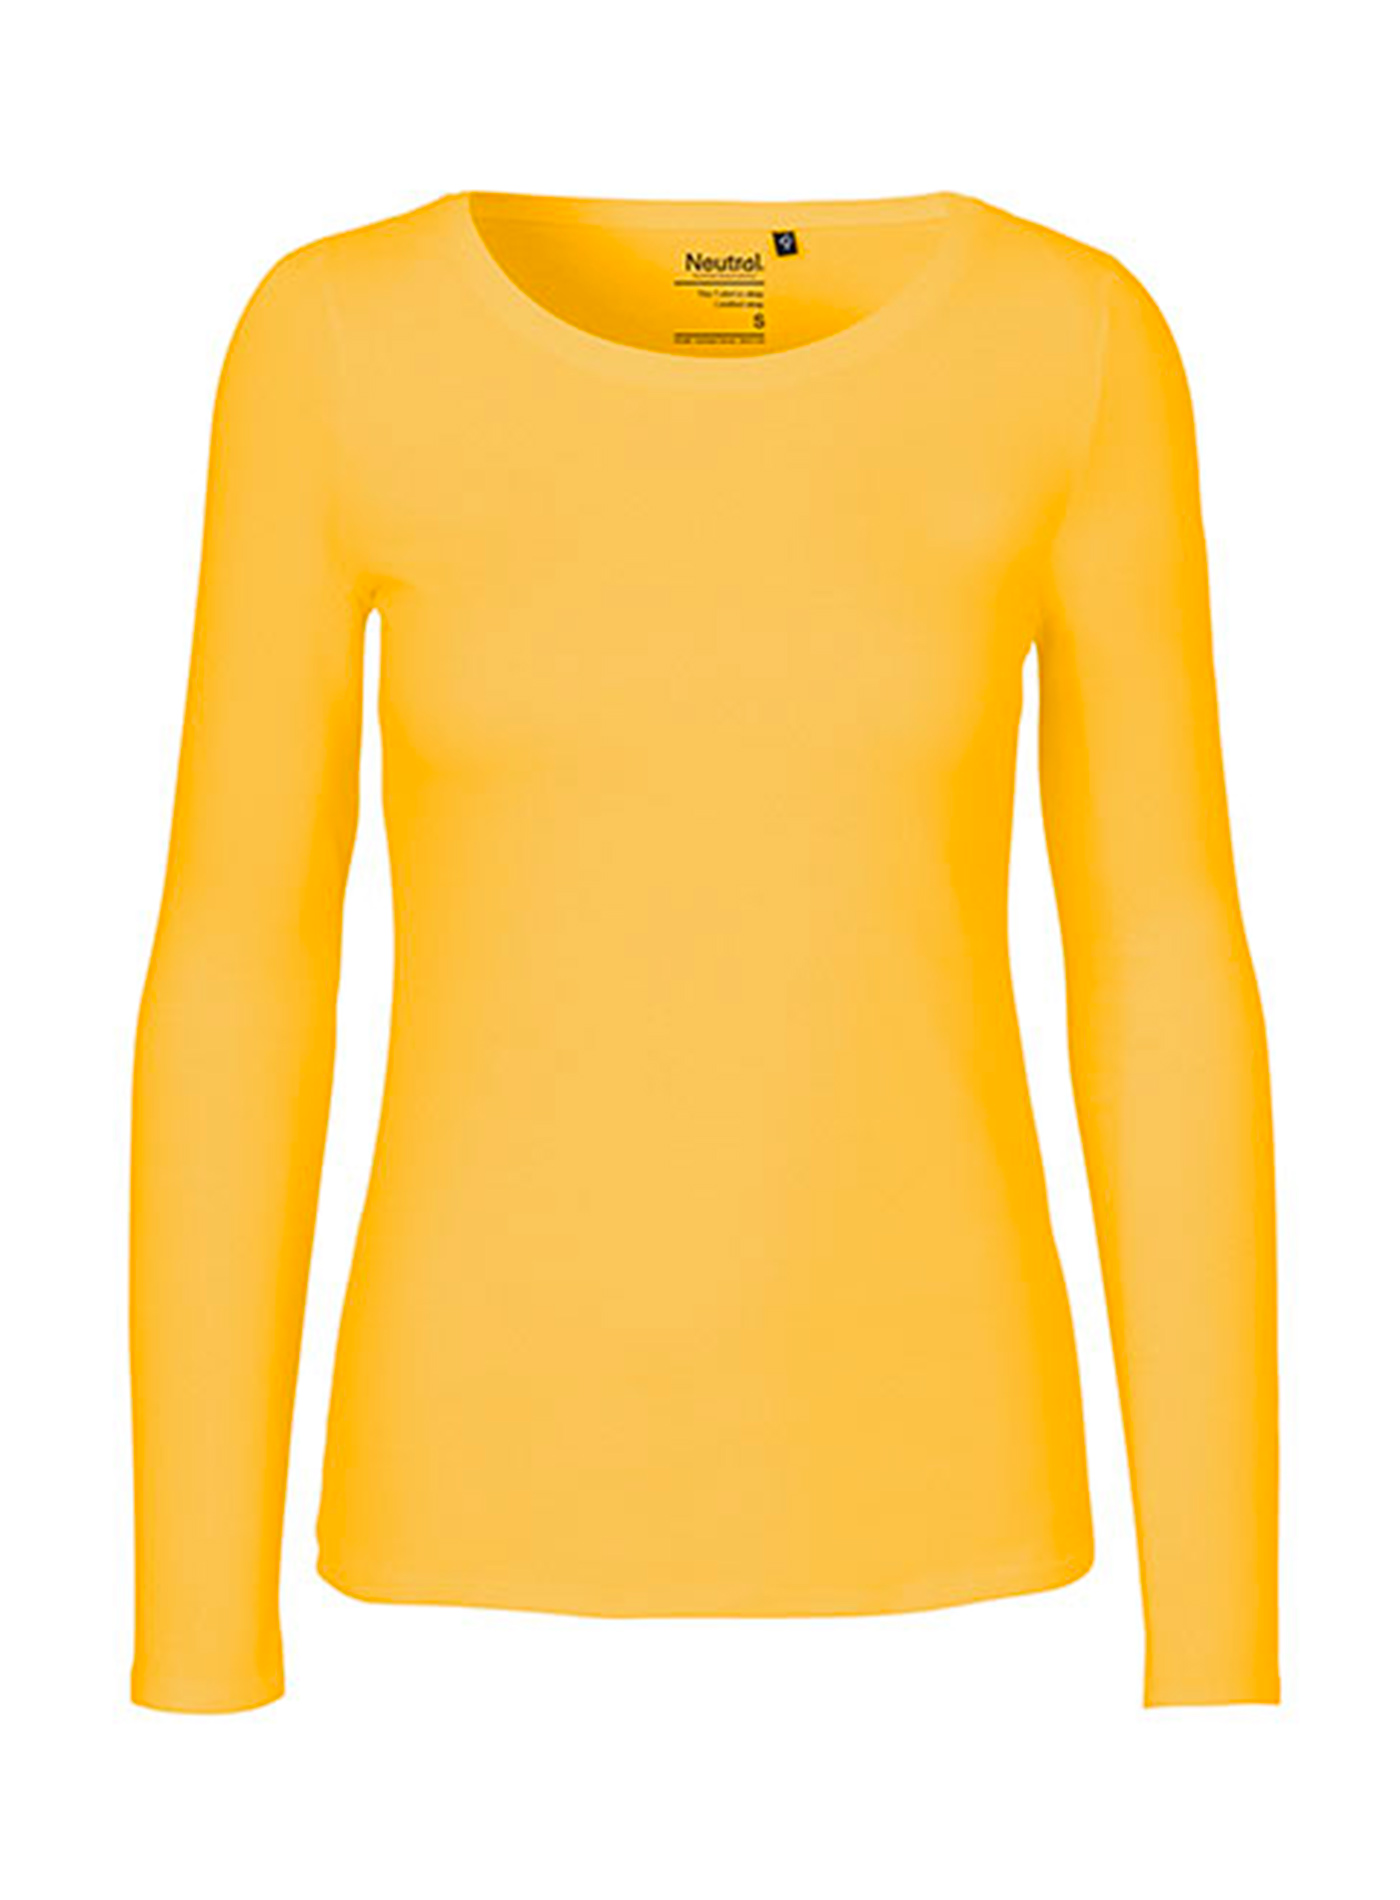 Dámské tričko s dlouhým rukávem Neutral - Žlutá L